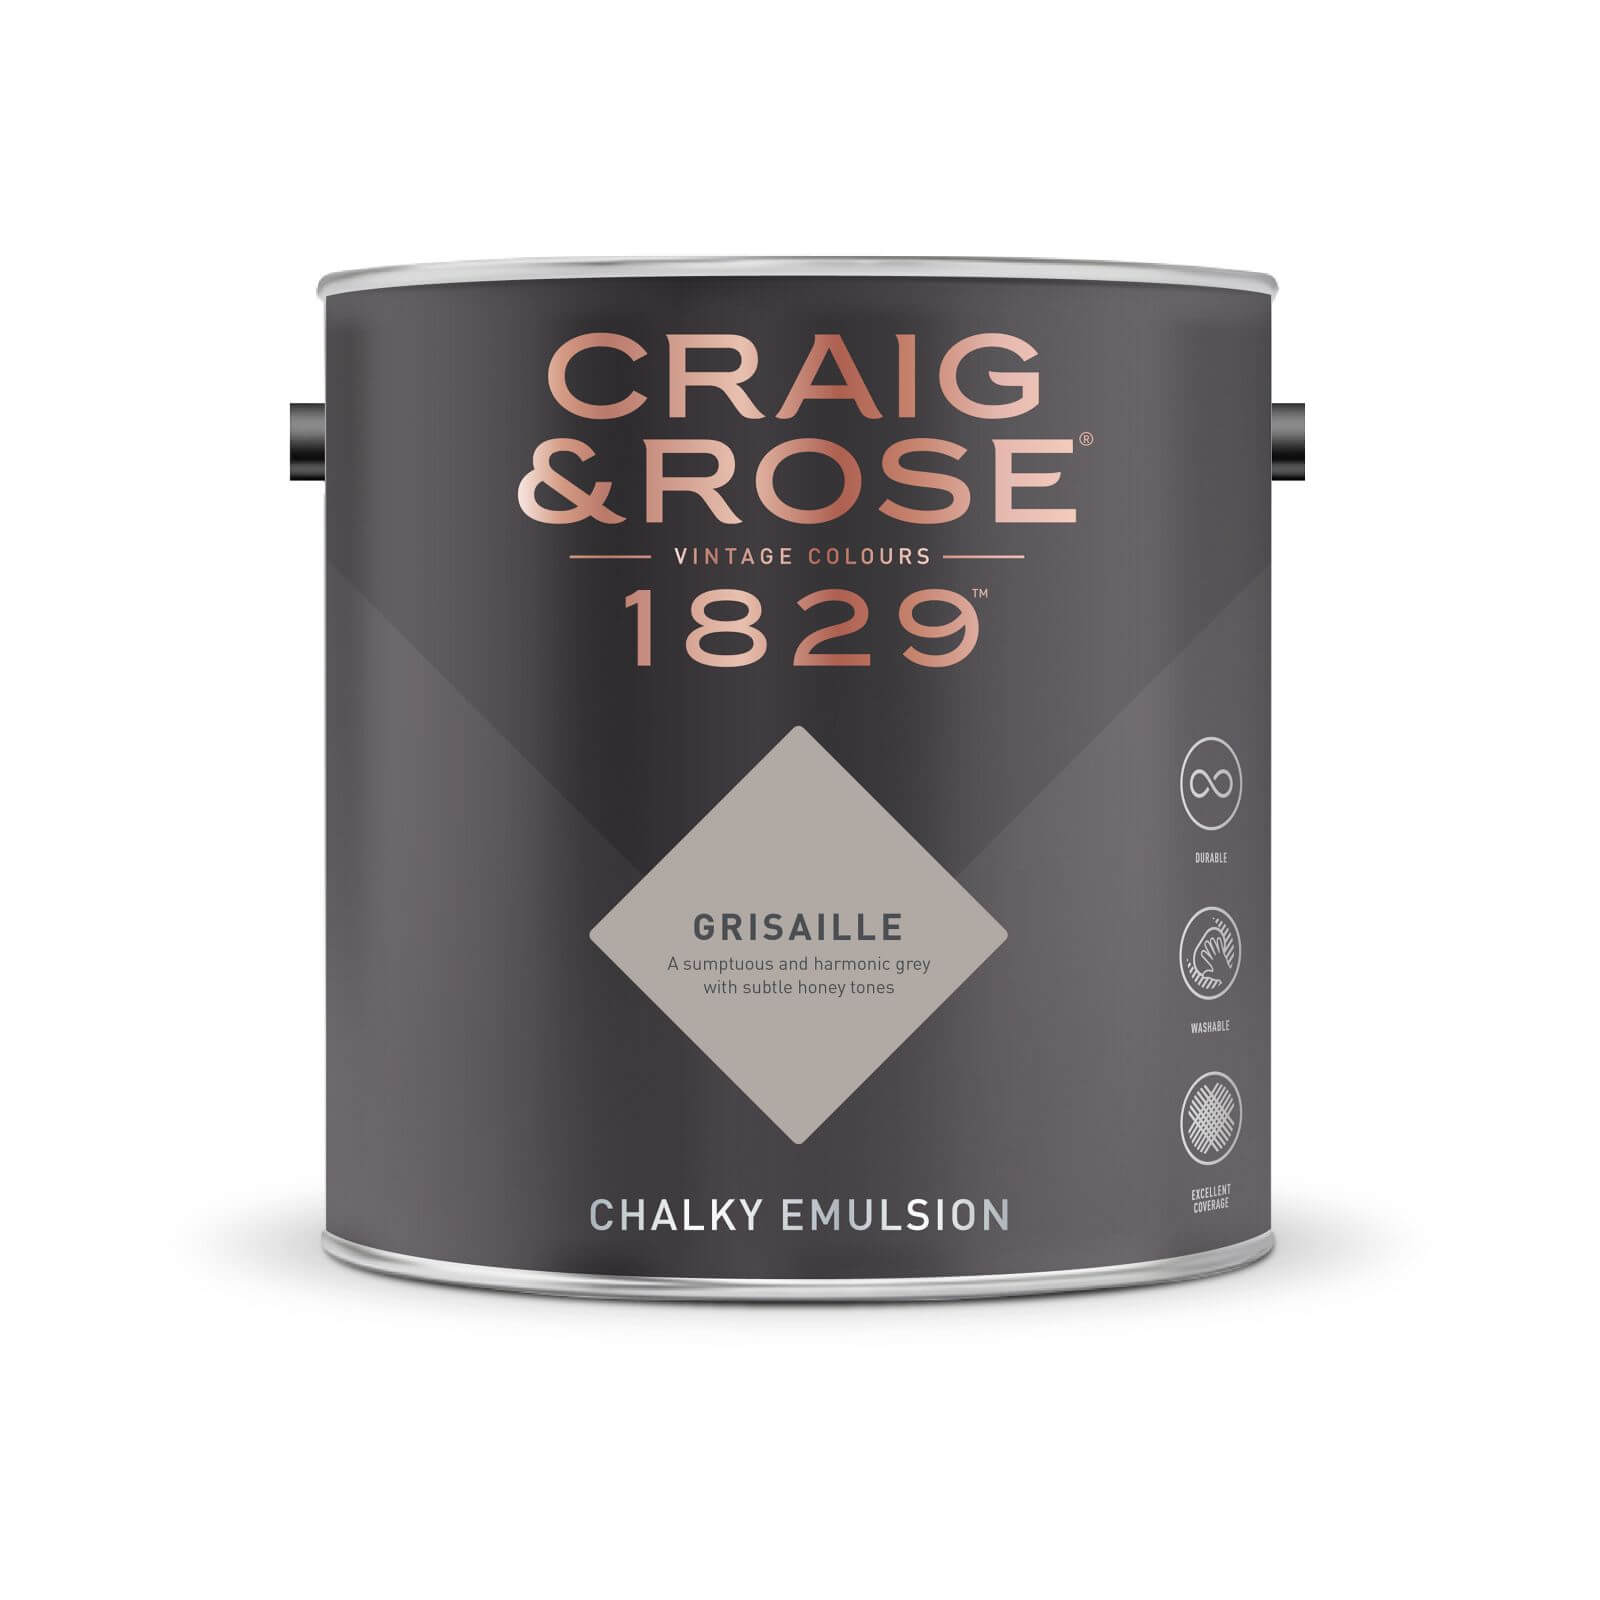 Craig & Rose 1829 Chalky Emulsion Paint Grisaille - 2.5L